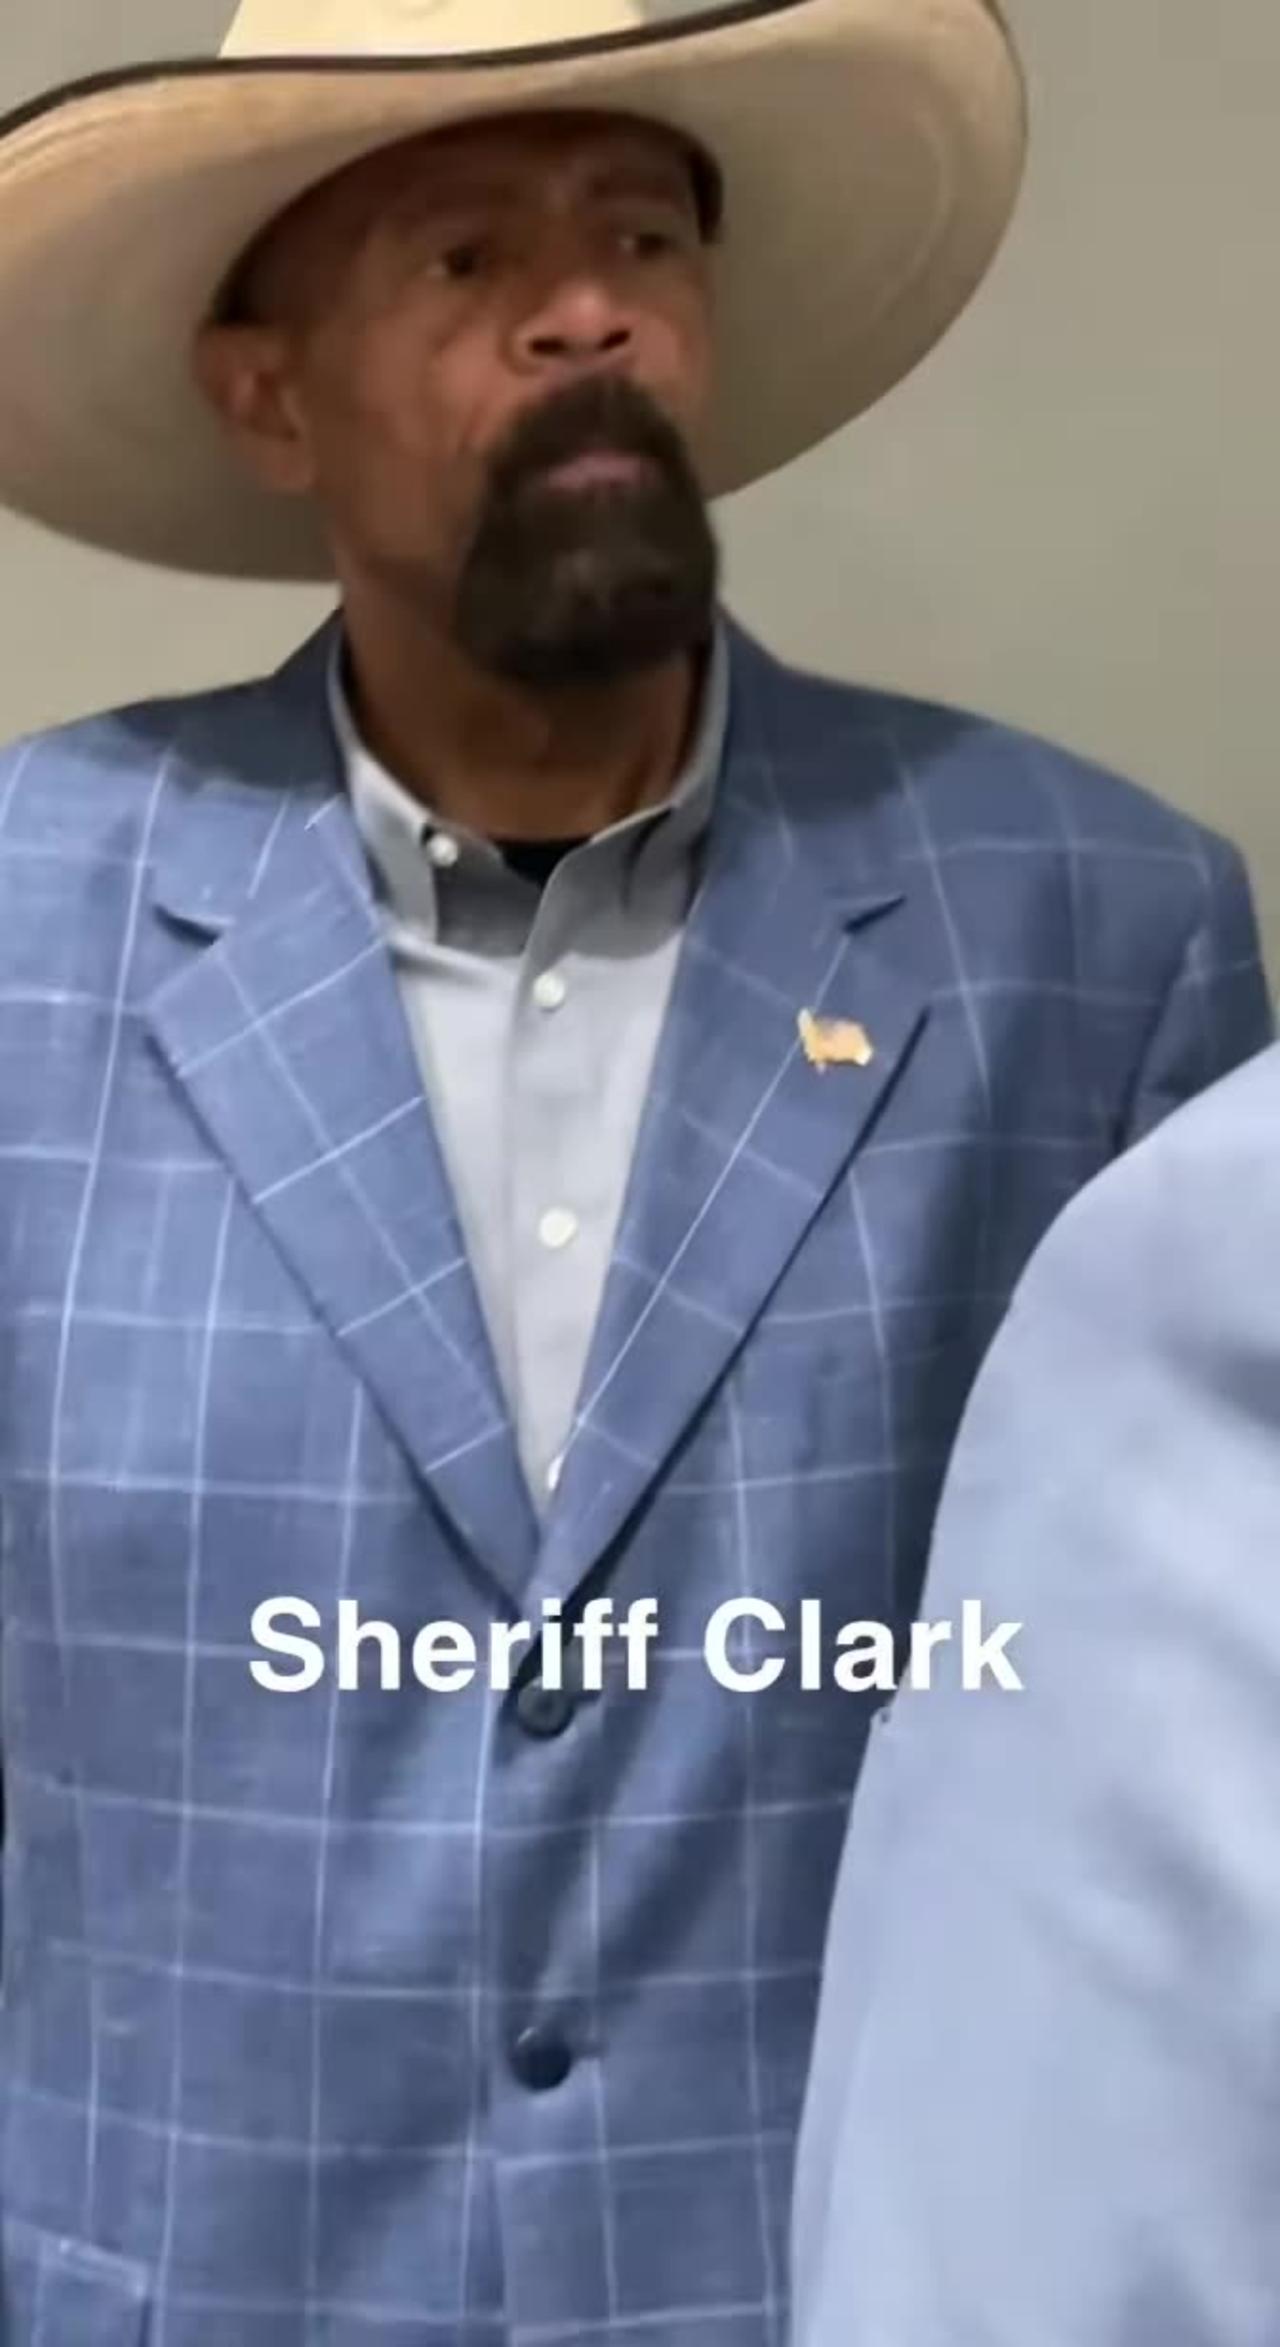 Sheriff Clarke Protection Detail GOP 2021 #SheriffClarke #NRA #bodyguard #GOP